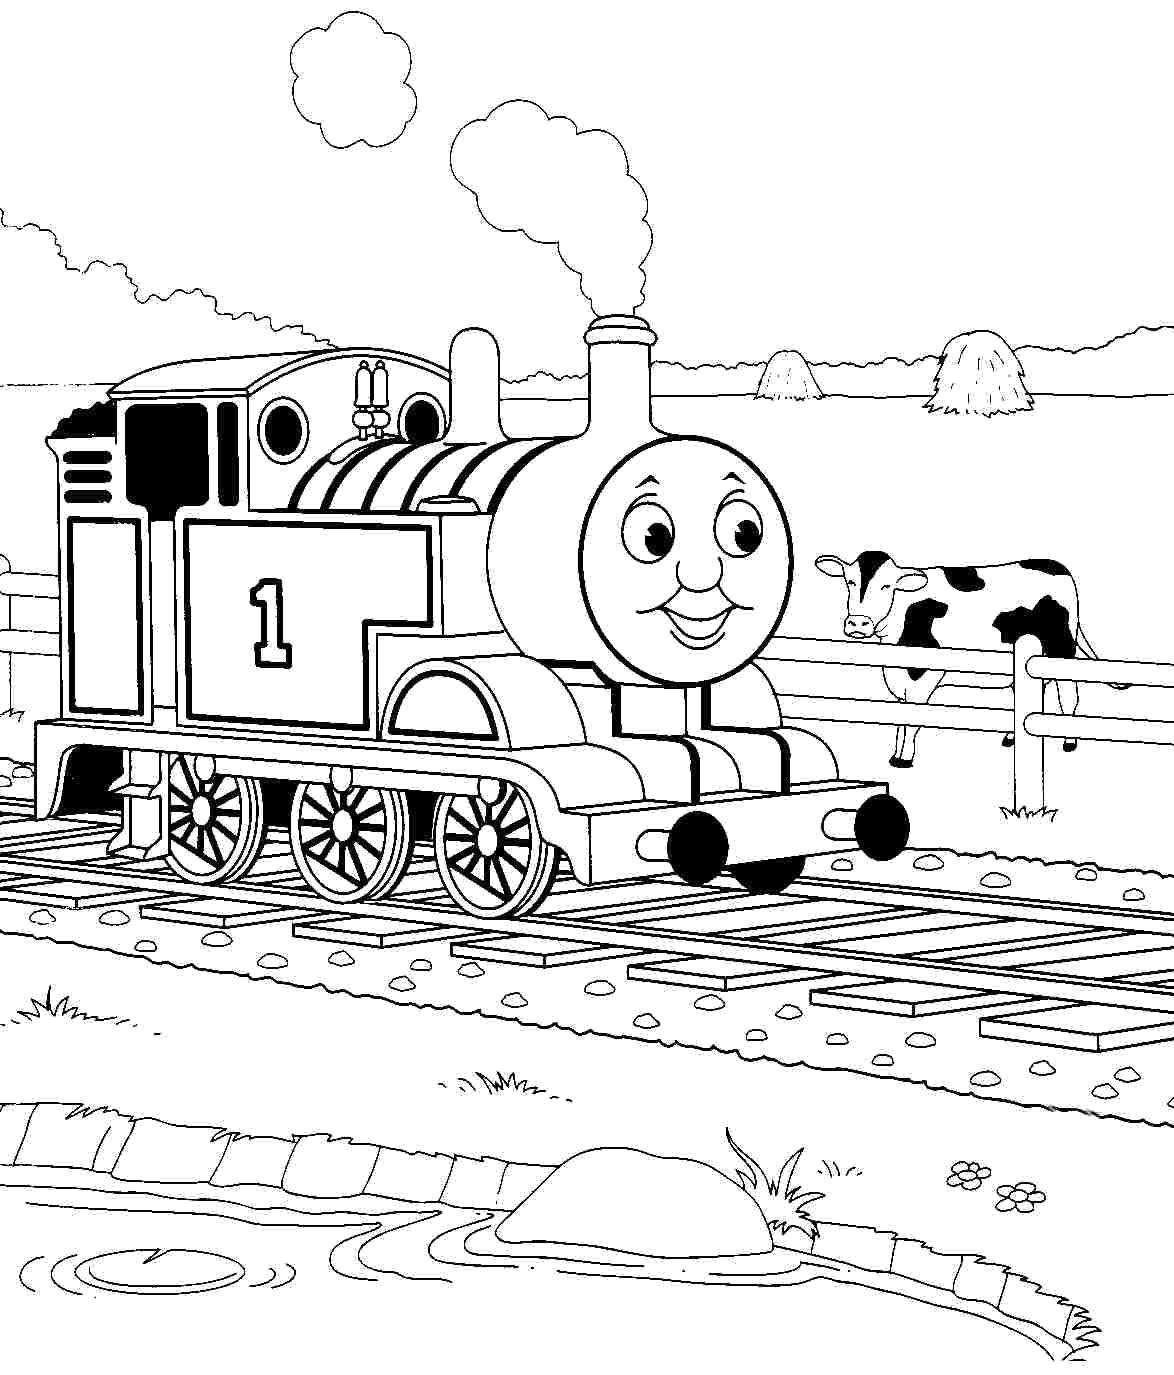 Coloring Thomas the tank engine. Category train. Tags:  Train, Thomas.